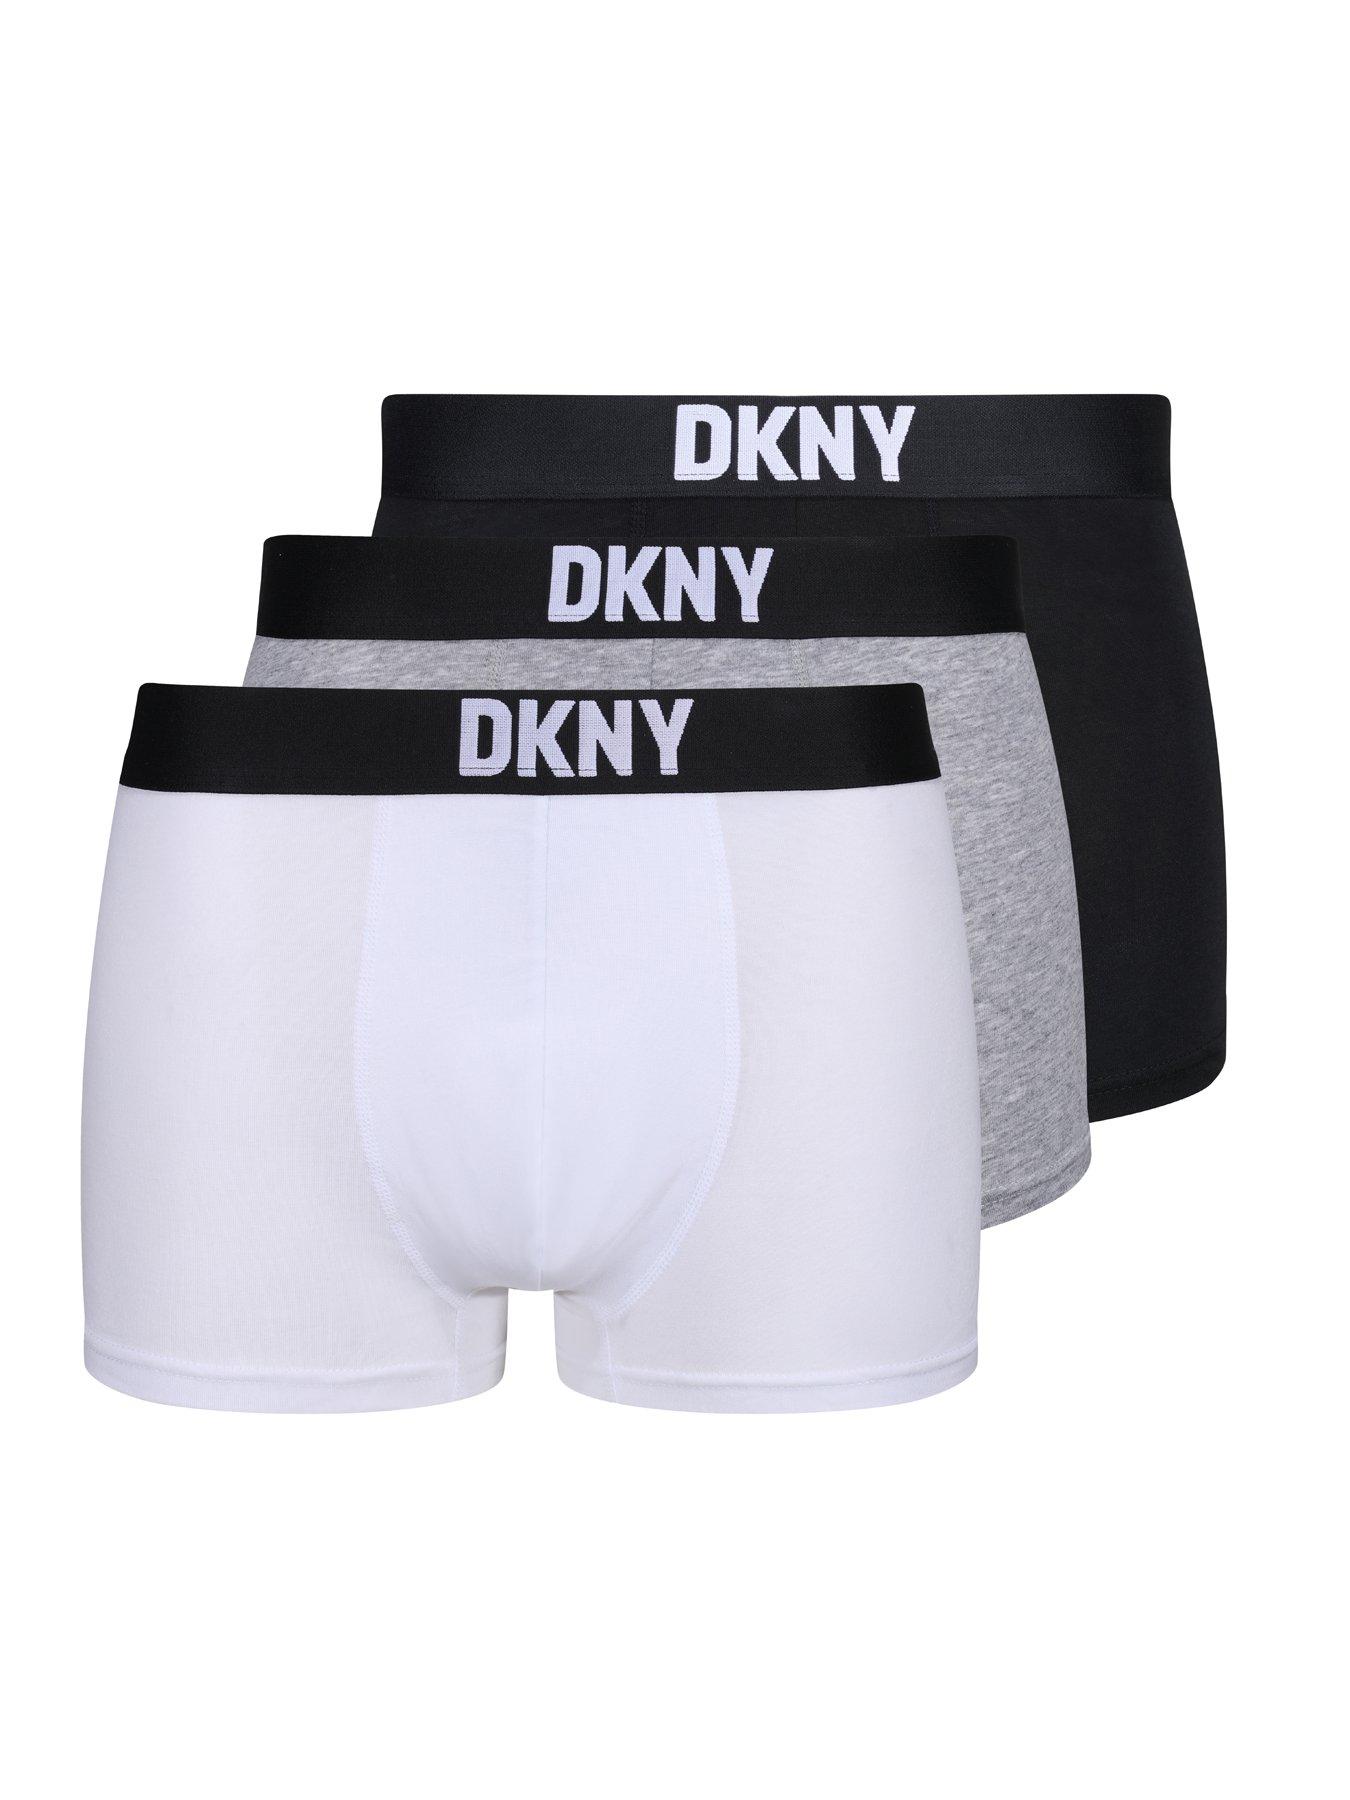 L, Dkny, Underwear & socks, Men